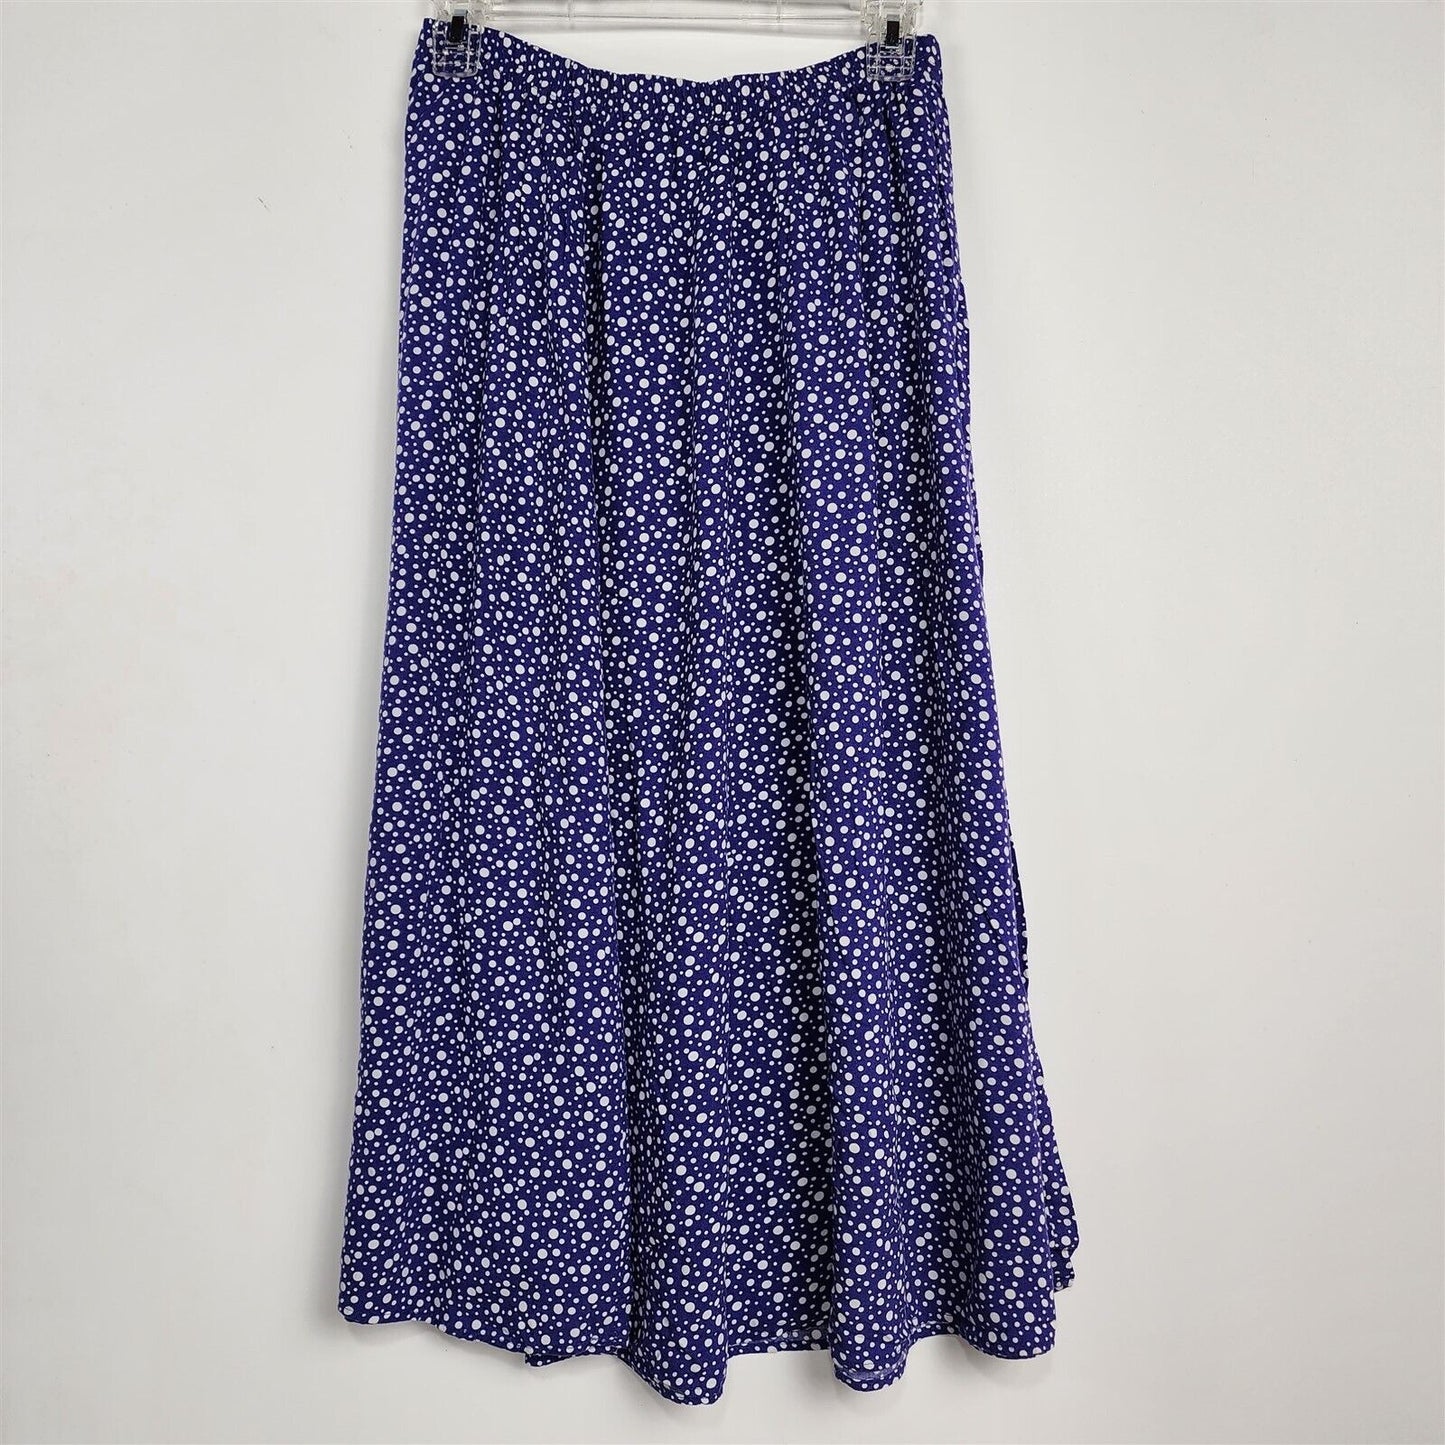 Vintage Blue & White Polka Dot Rayon Print Sleeveless Top Skirt Set